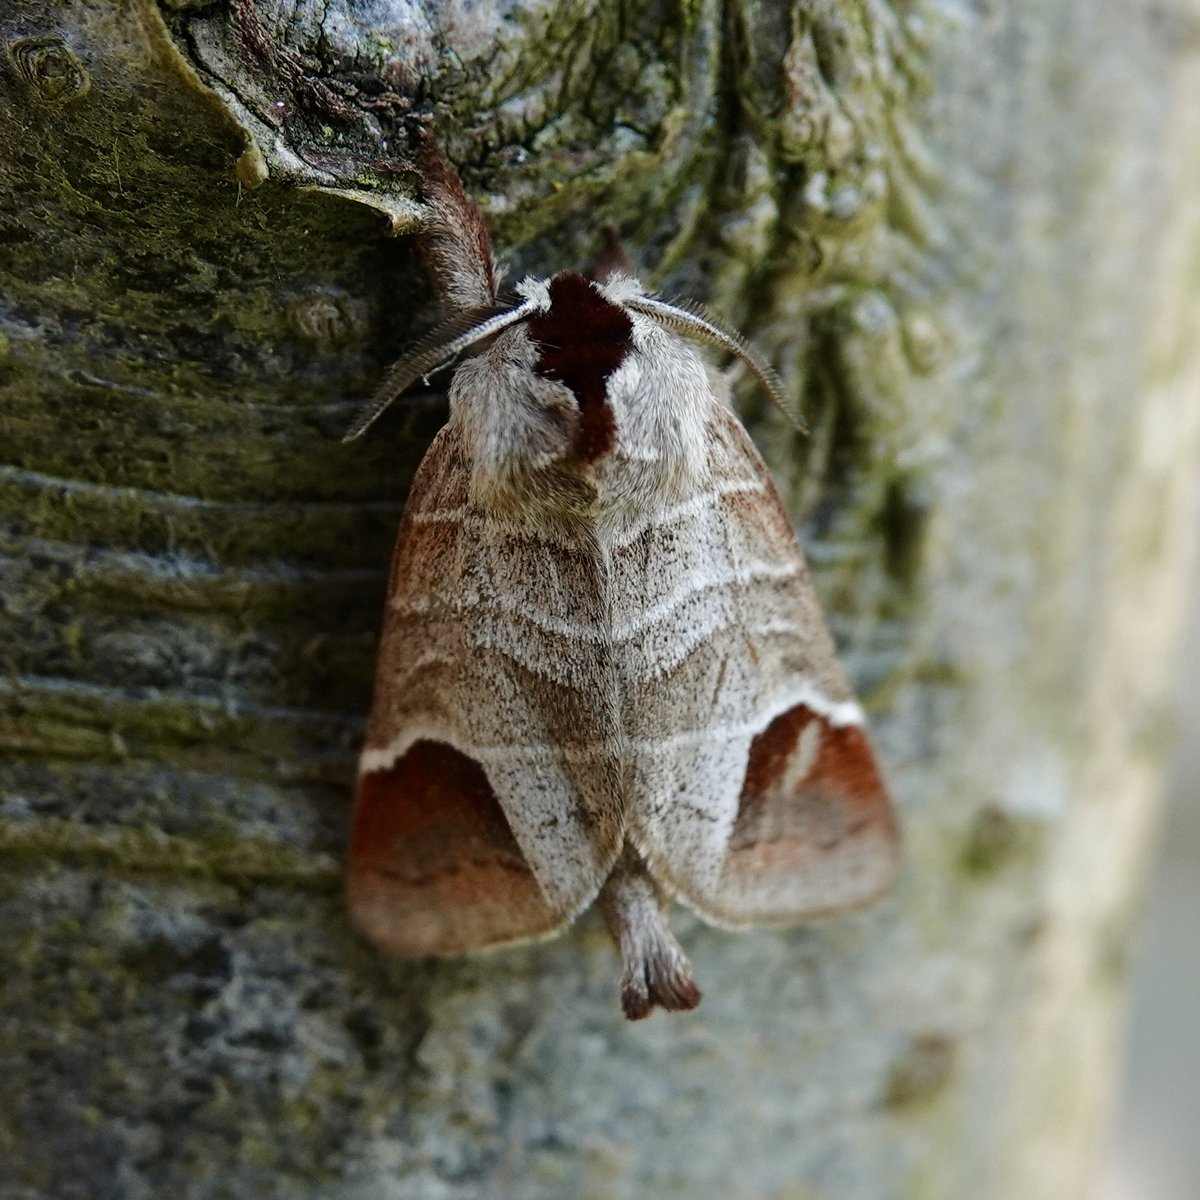 Chocolate-tip to light in Essex

#MothsMatter #NatureBeauty #TwitterNatureCommunity #wildlifephotography